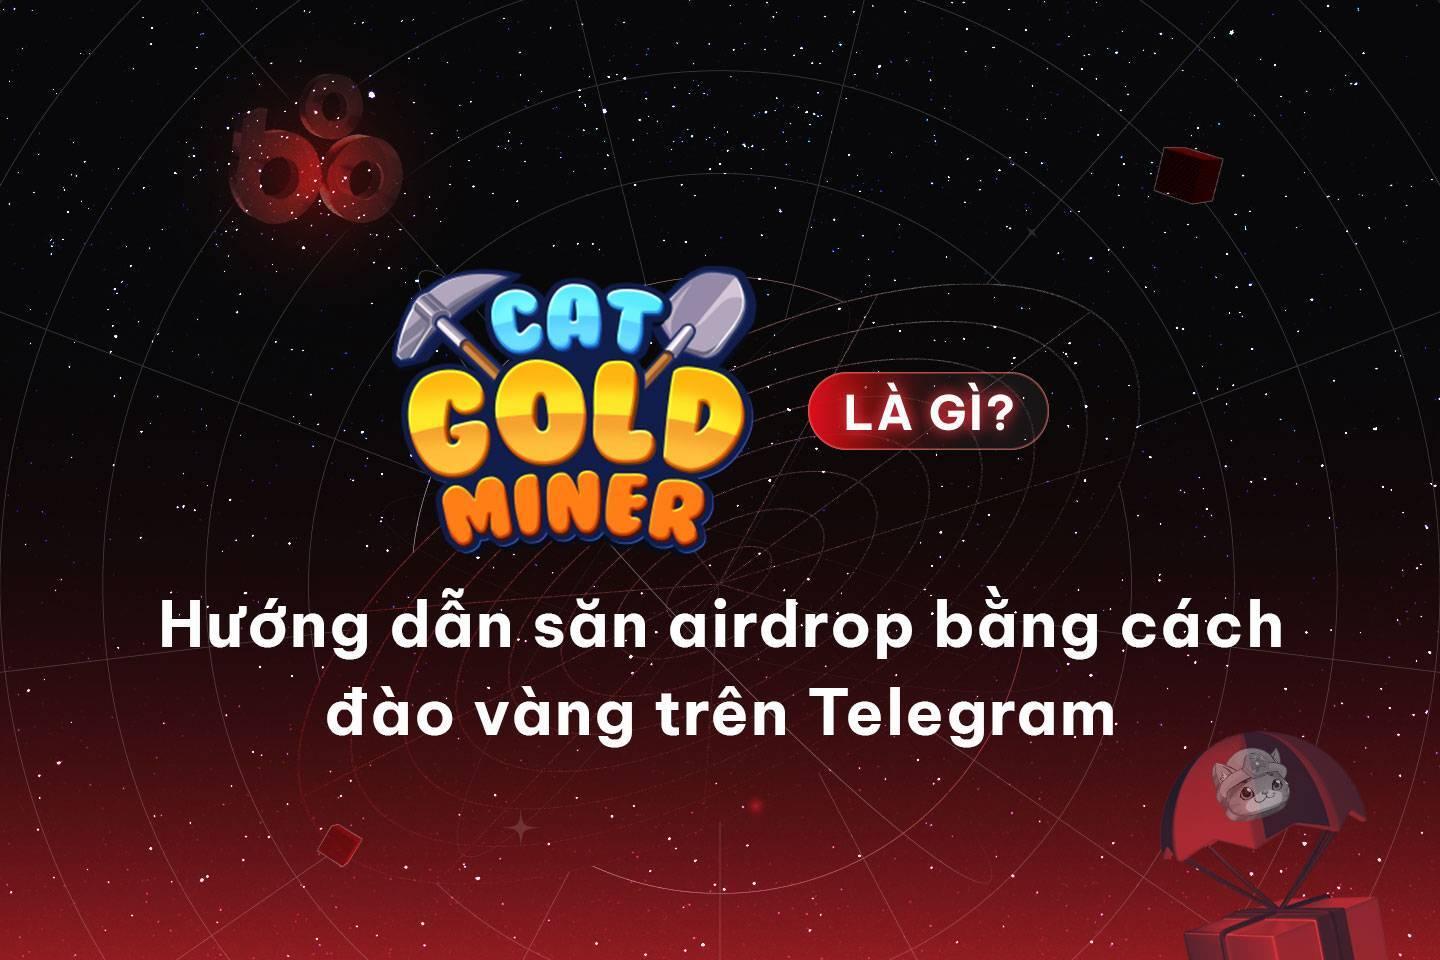 cat-gold-miner-la-gi-huong-dan-san-airdrop-bang-cach-dao-vang-tren-telegram